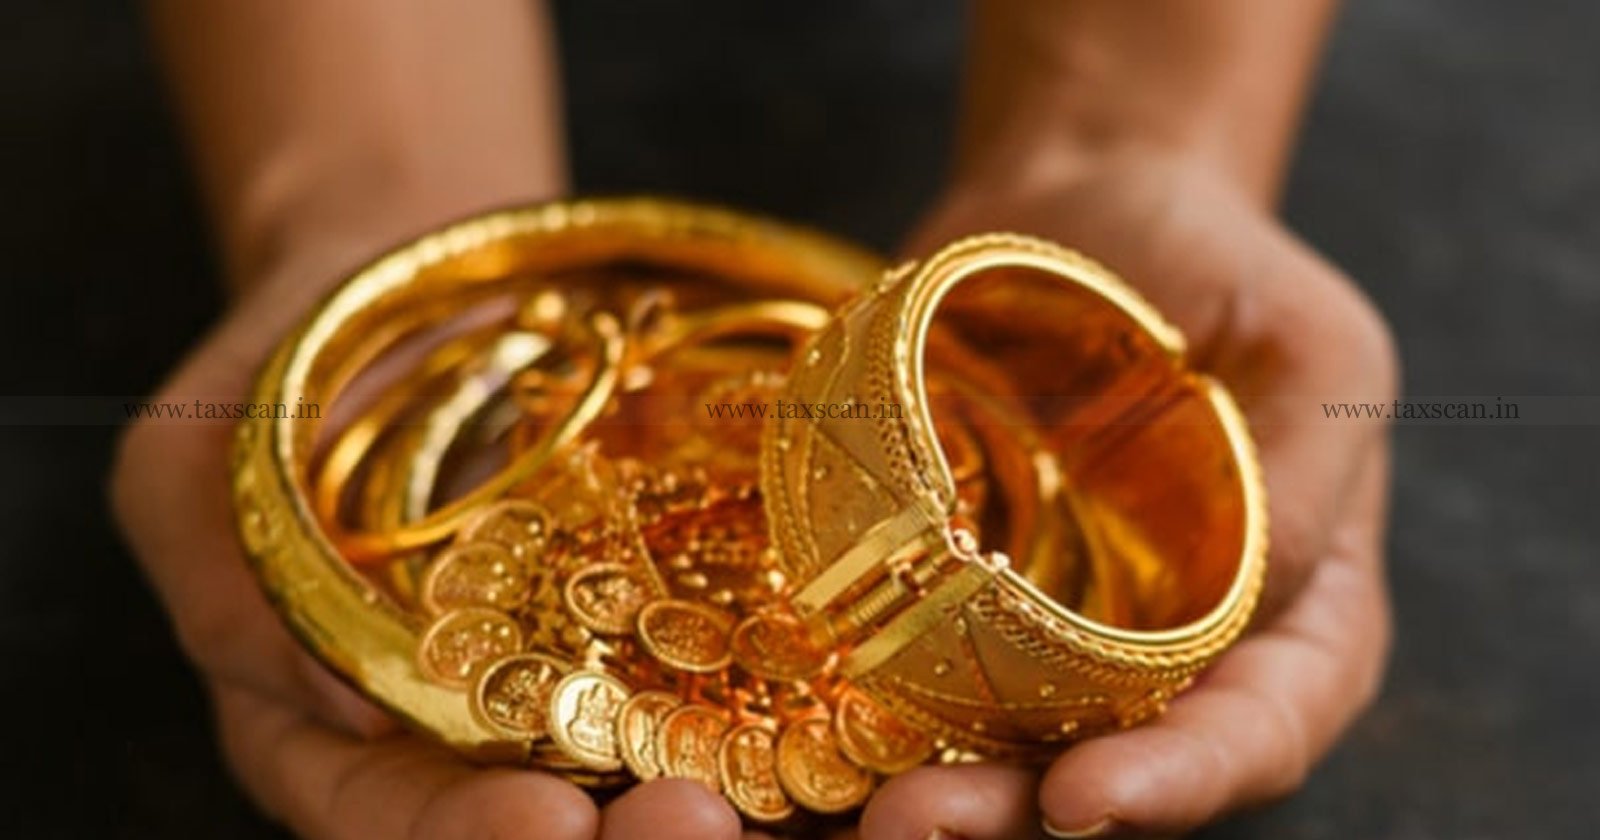 Execution of PoA - Petitioner - Bedridden - Kerala HC - Re-Export Seized Gold Ornaments - taxscan